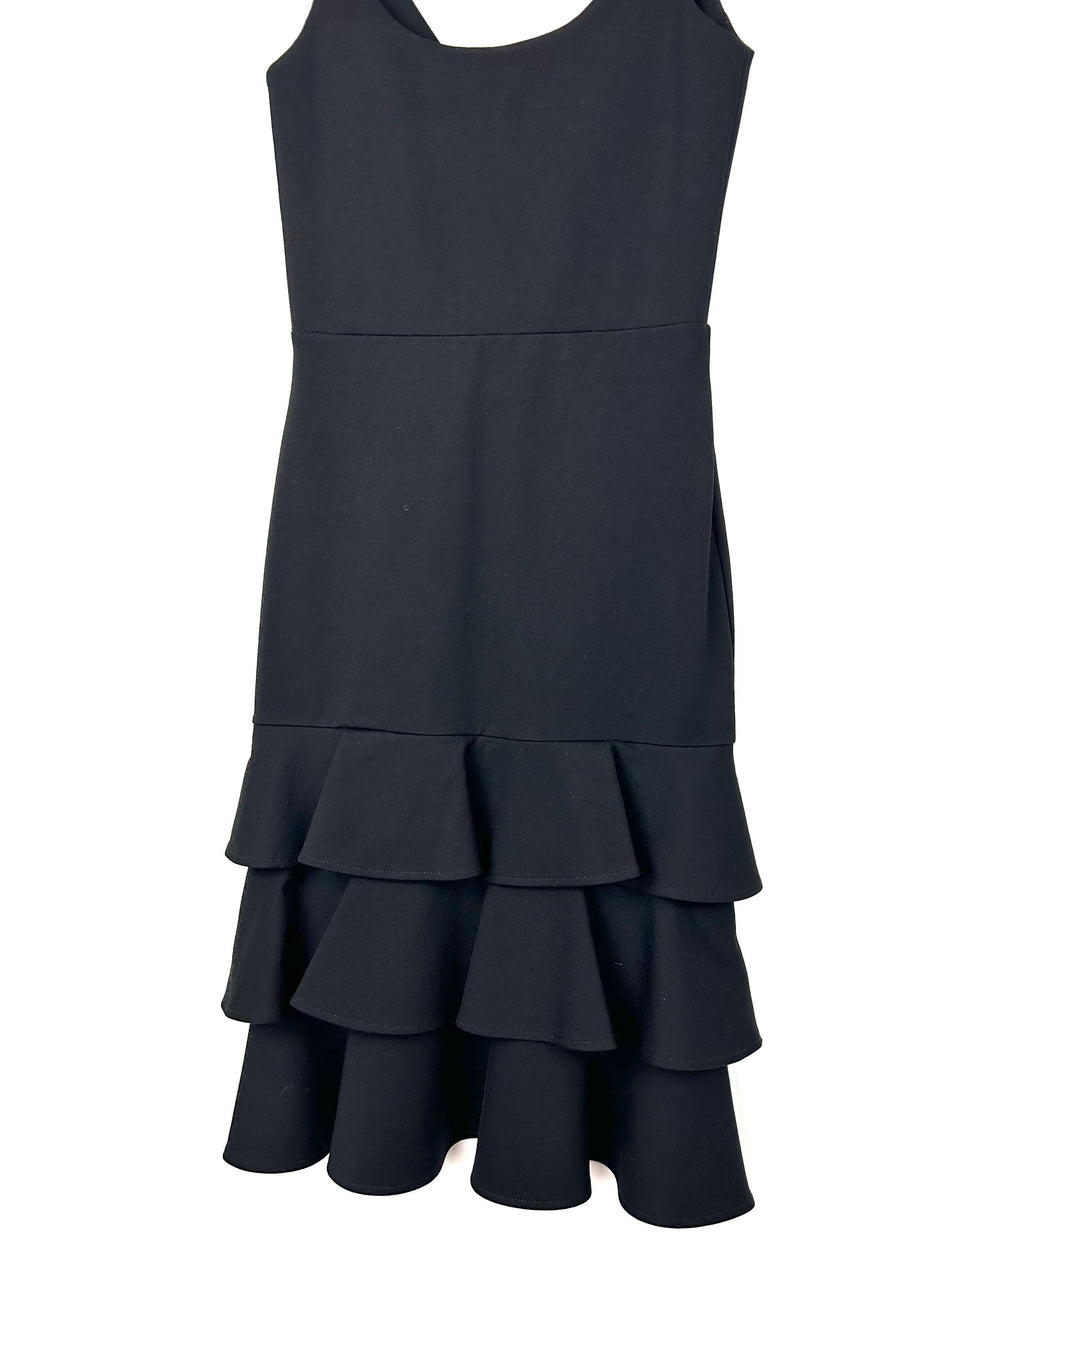 Black Ruffle Hem Dress - Size 4/6